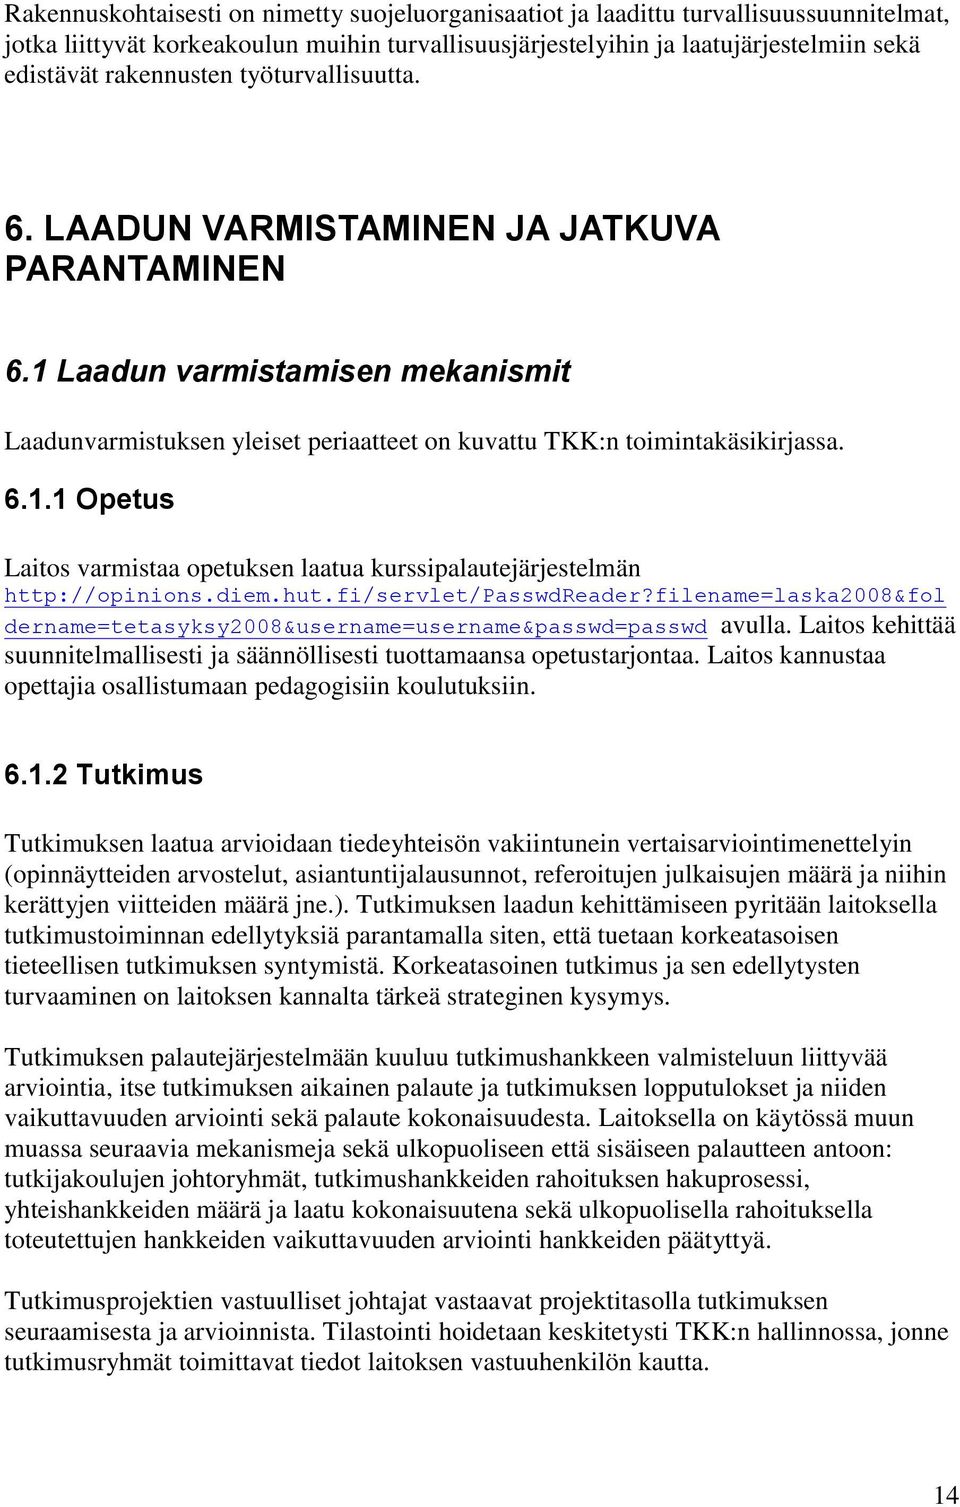 diem.hut.fi/servlet/passwdreader?filename=laska2008&fol dername=tetasyksy2008&username=username&passwd=passwd avulla.